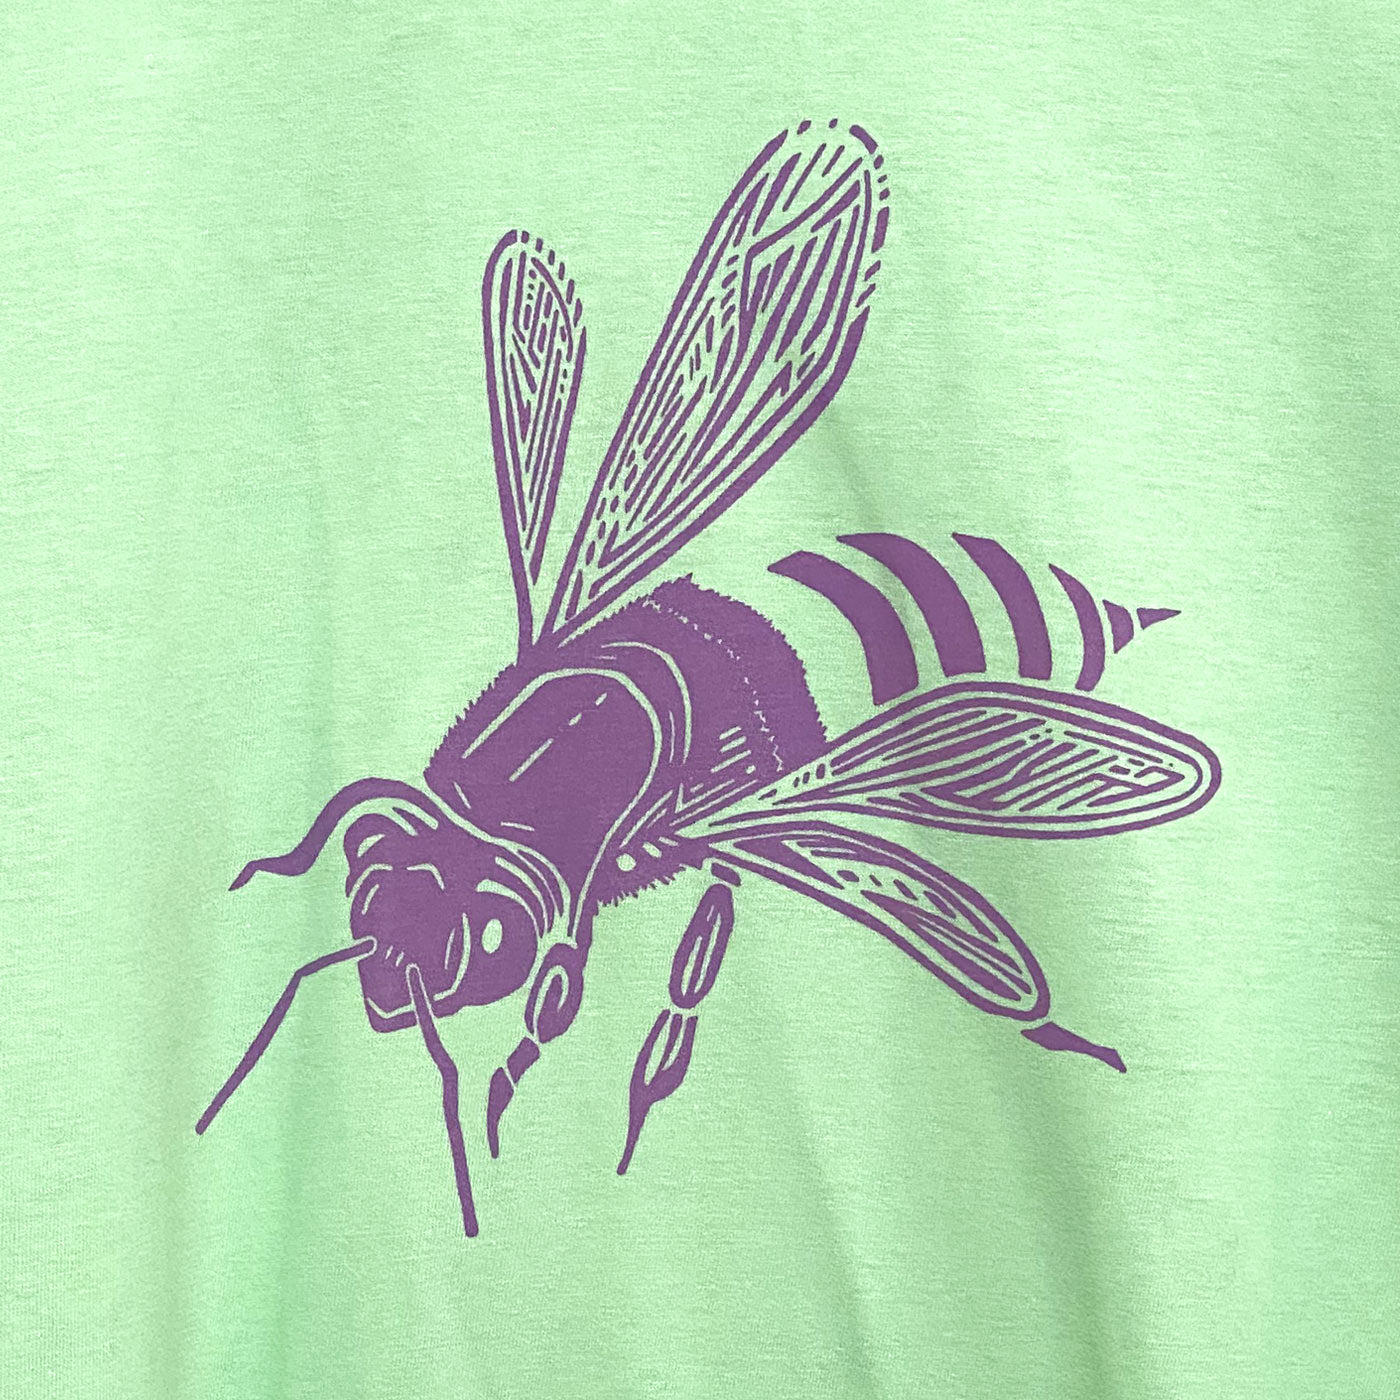 Purple Bee on Light Green T-Shirt